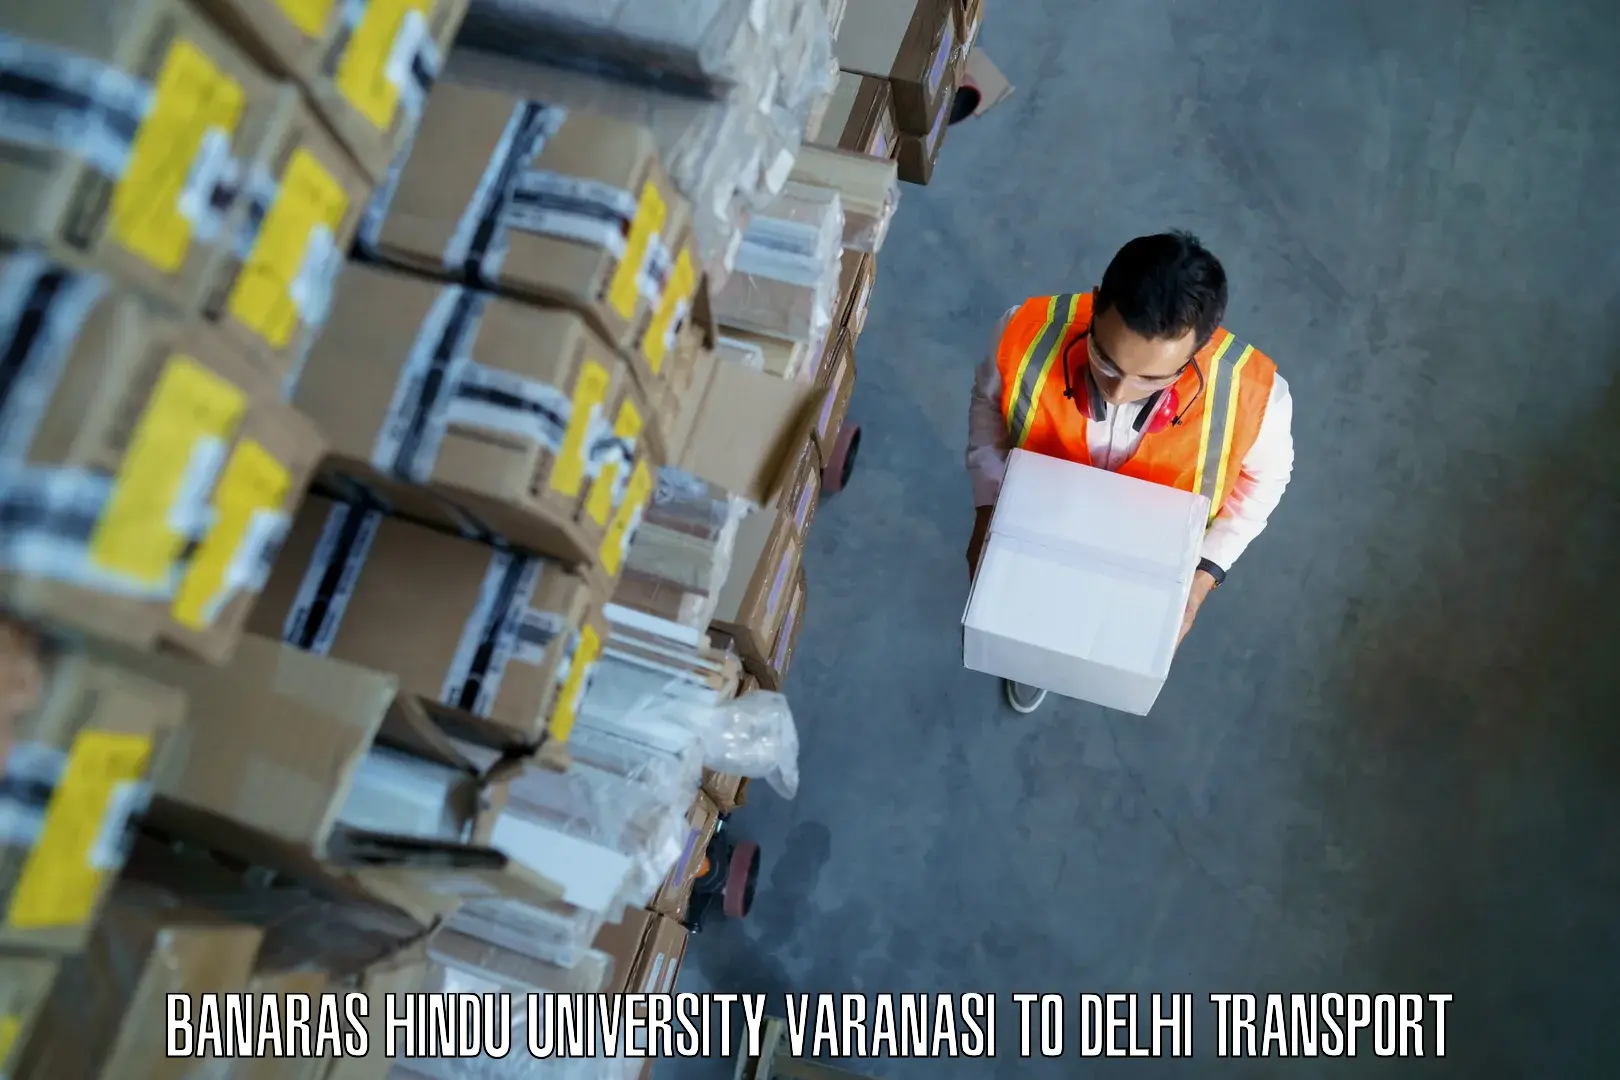 Daily transport service Banaras Hindu University Varanasi to Kalkaji